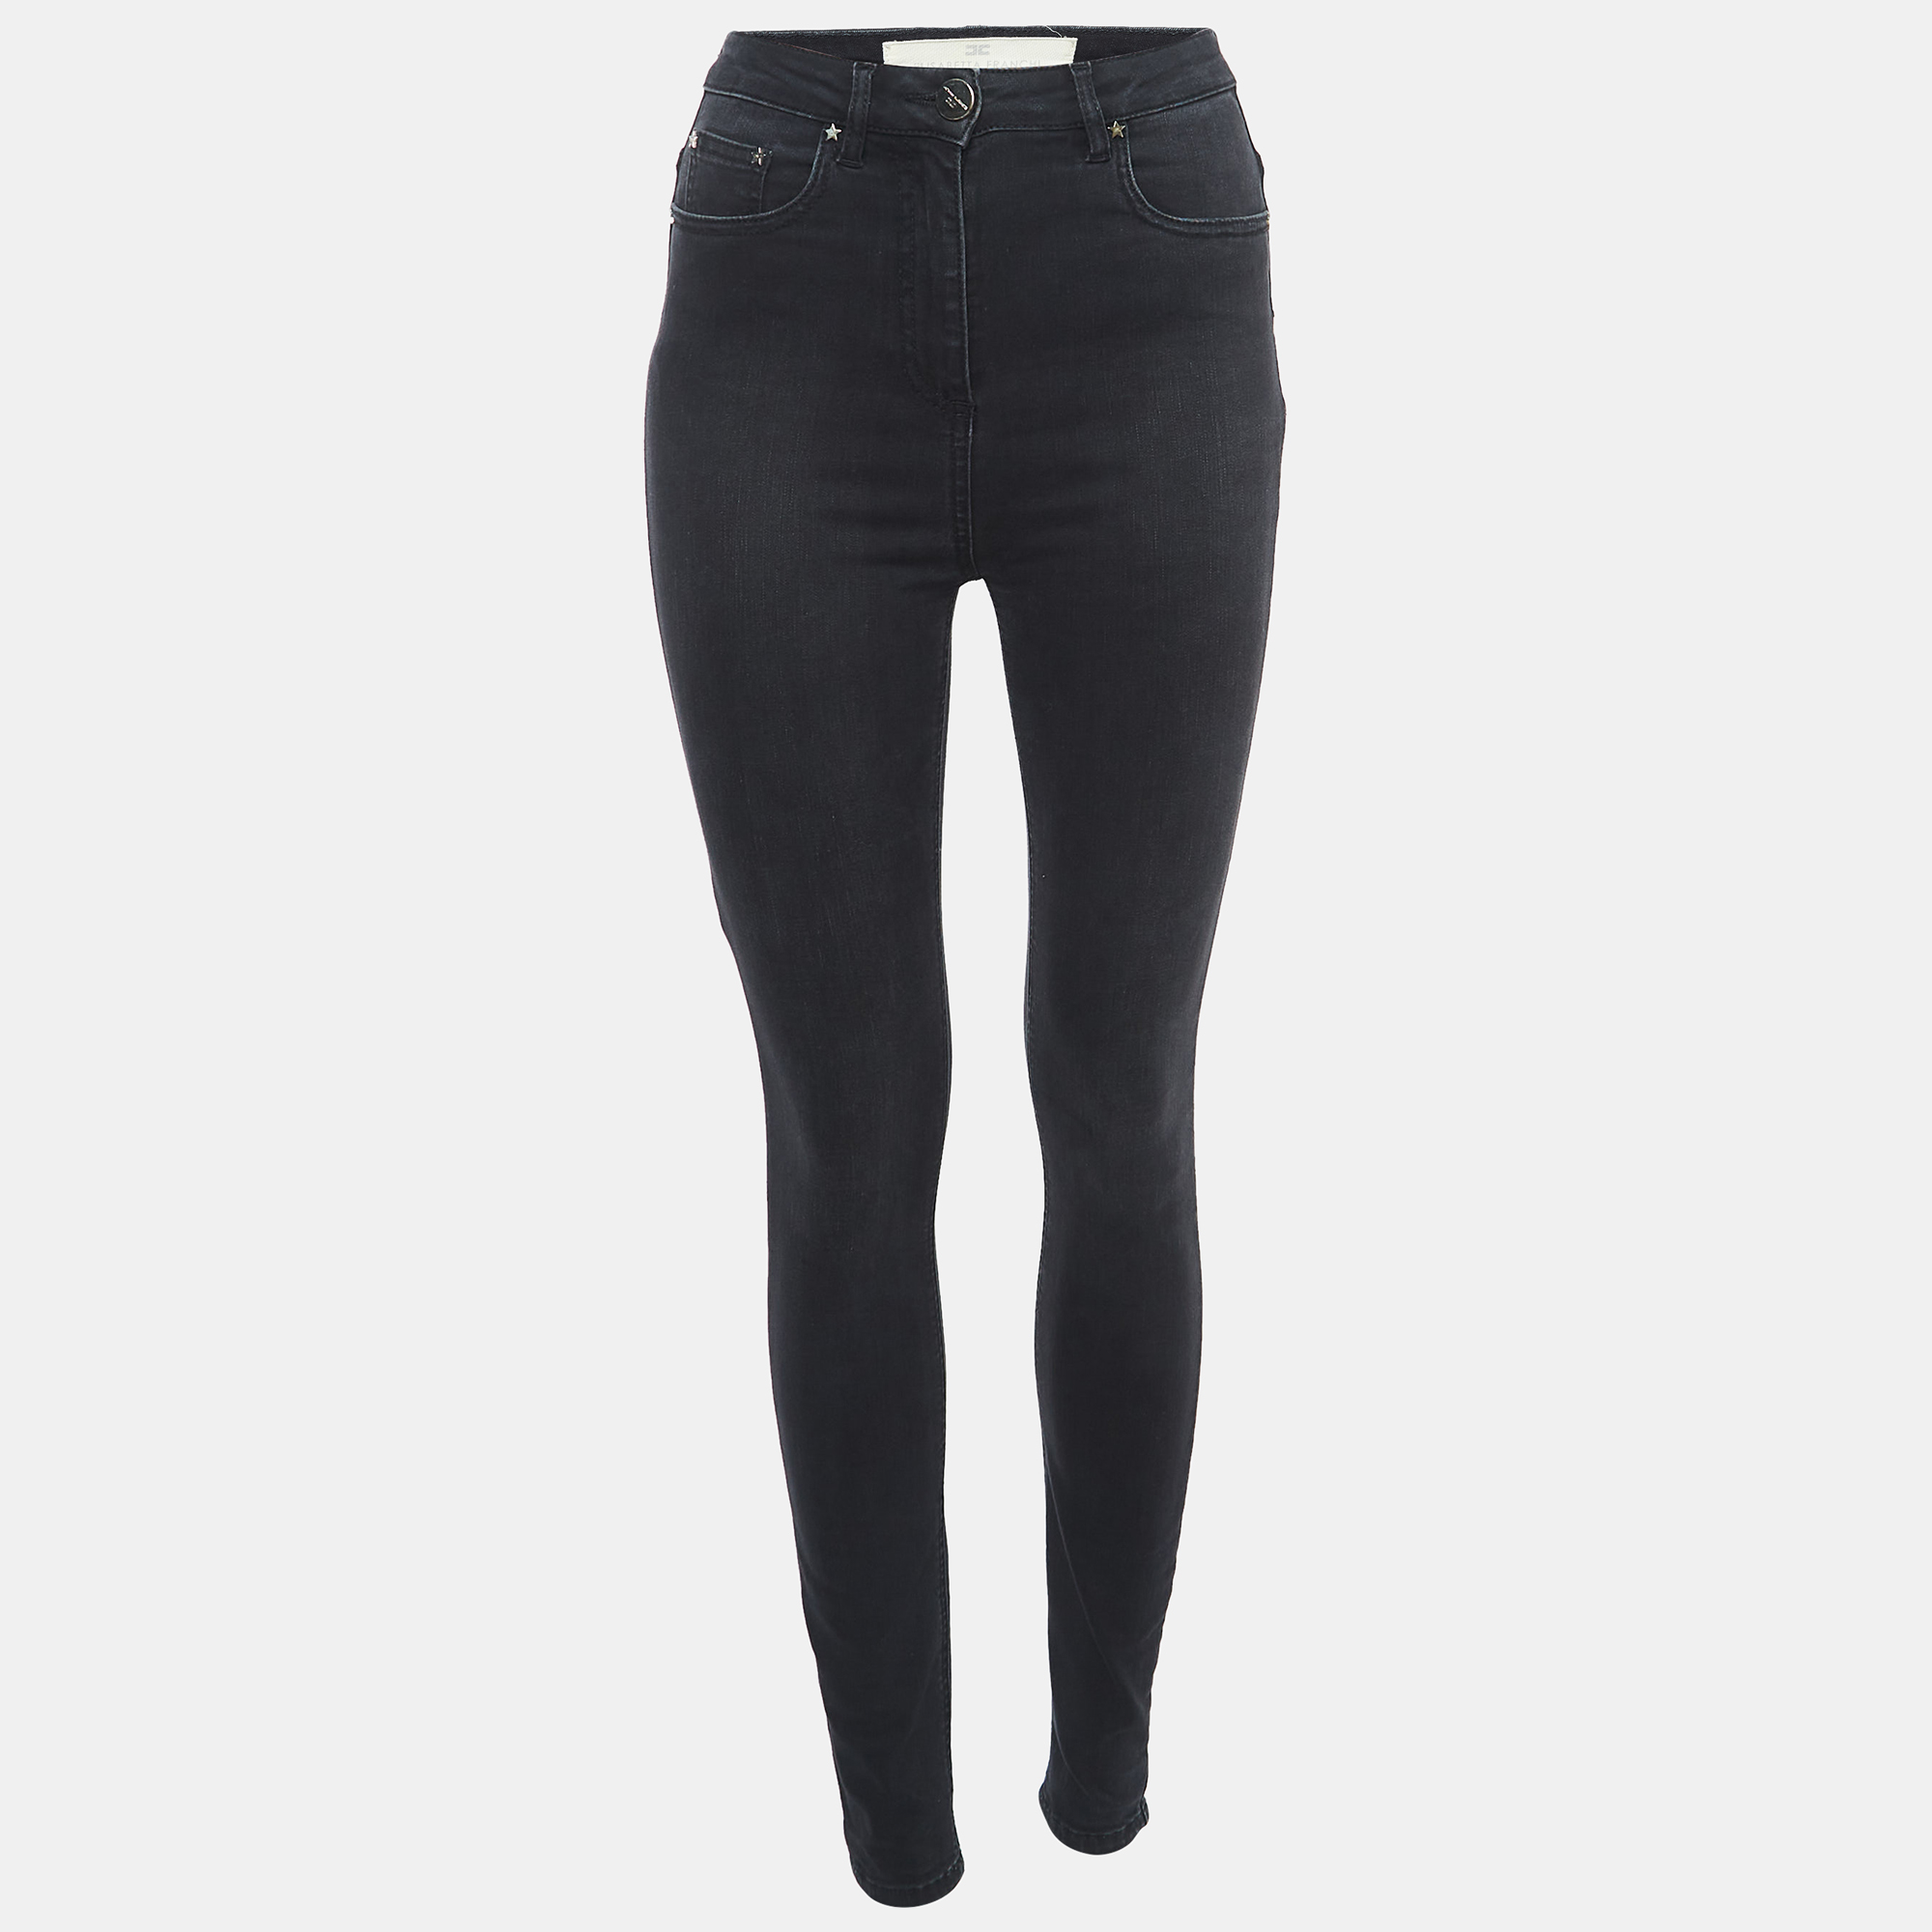 Elisabetta Franchi Charcoal Black Skinny Denim Jeans S Waist 26